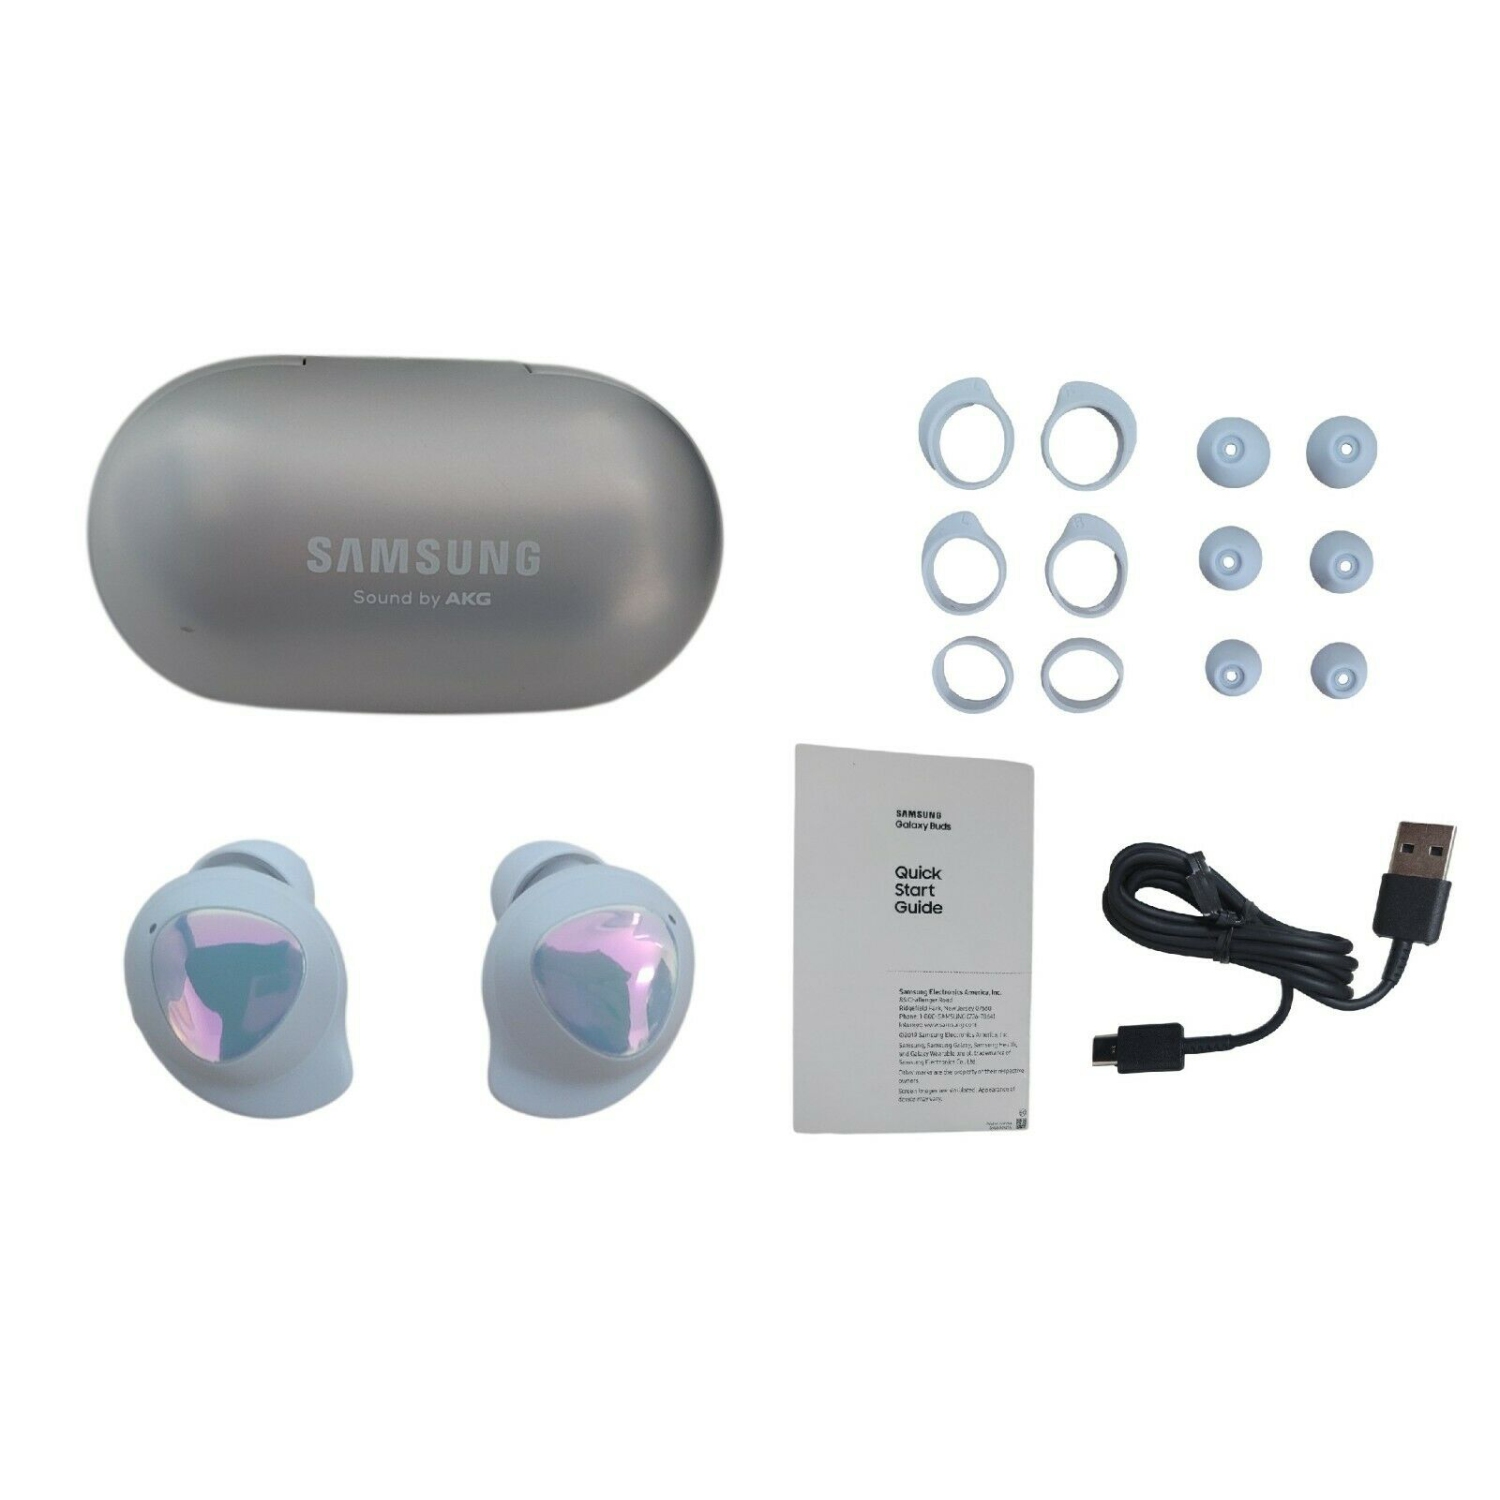 SAMSUNG Galaxy Buds SM-R170 True Wireless Bluetooth Earbuds (Silver) - Certified Refurbished